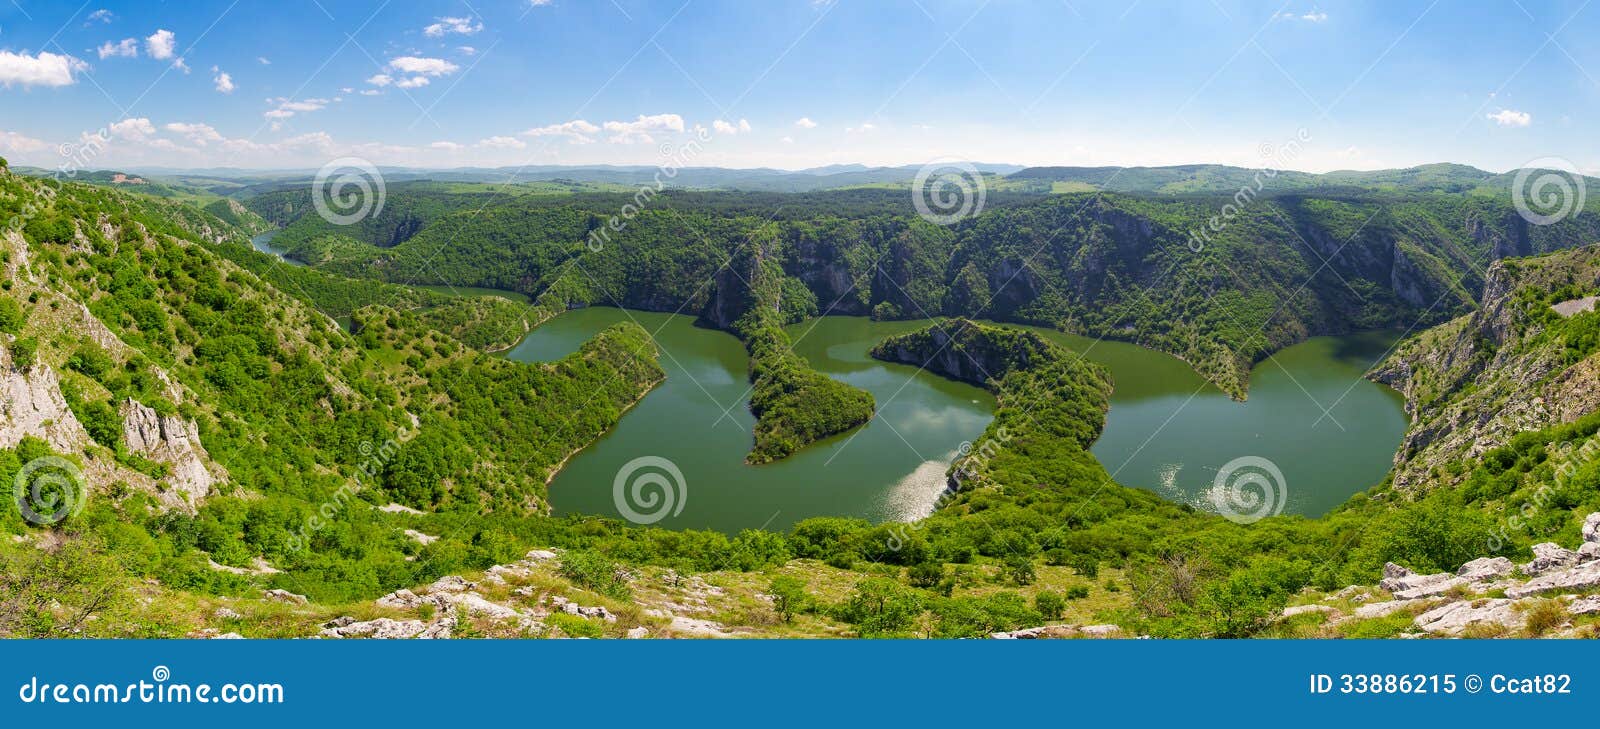 canyon of uvac river, serbia